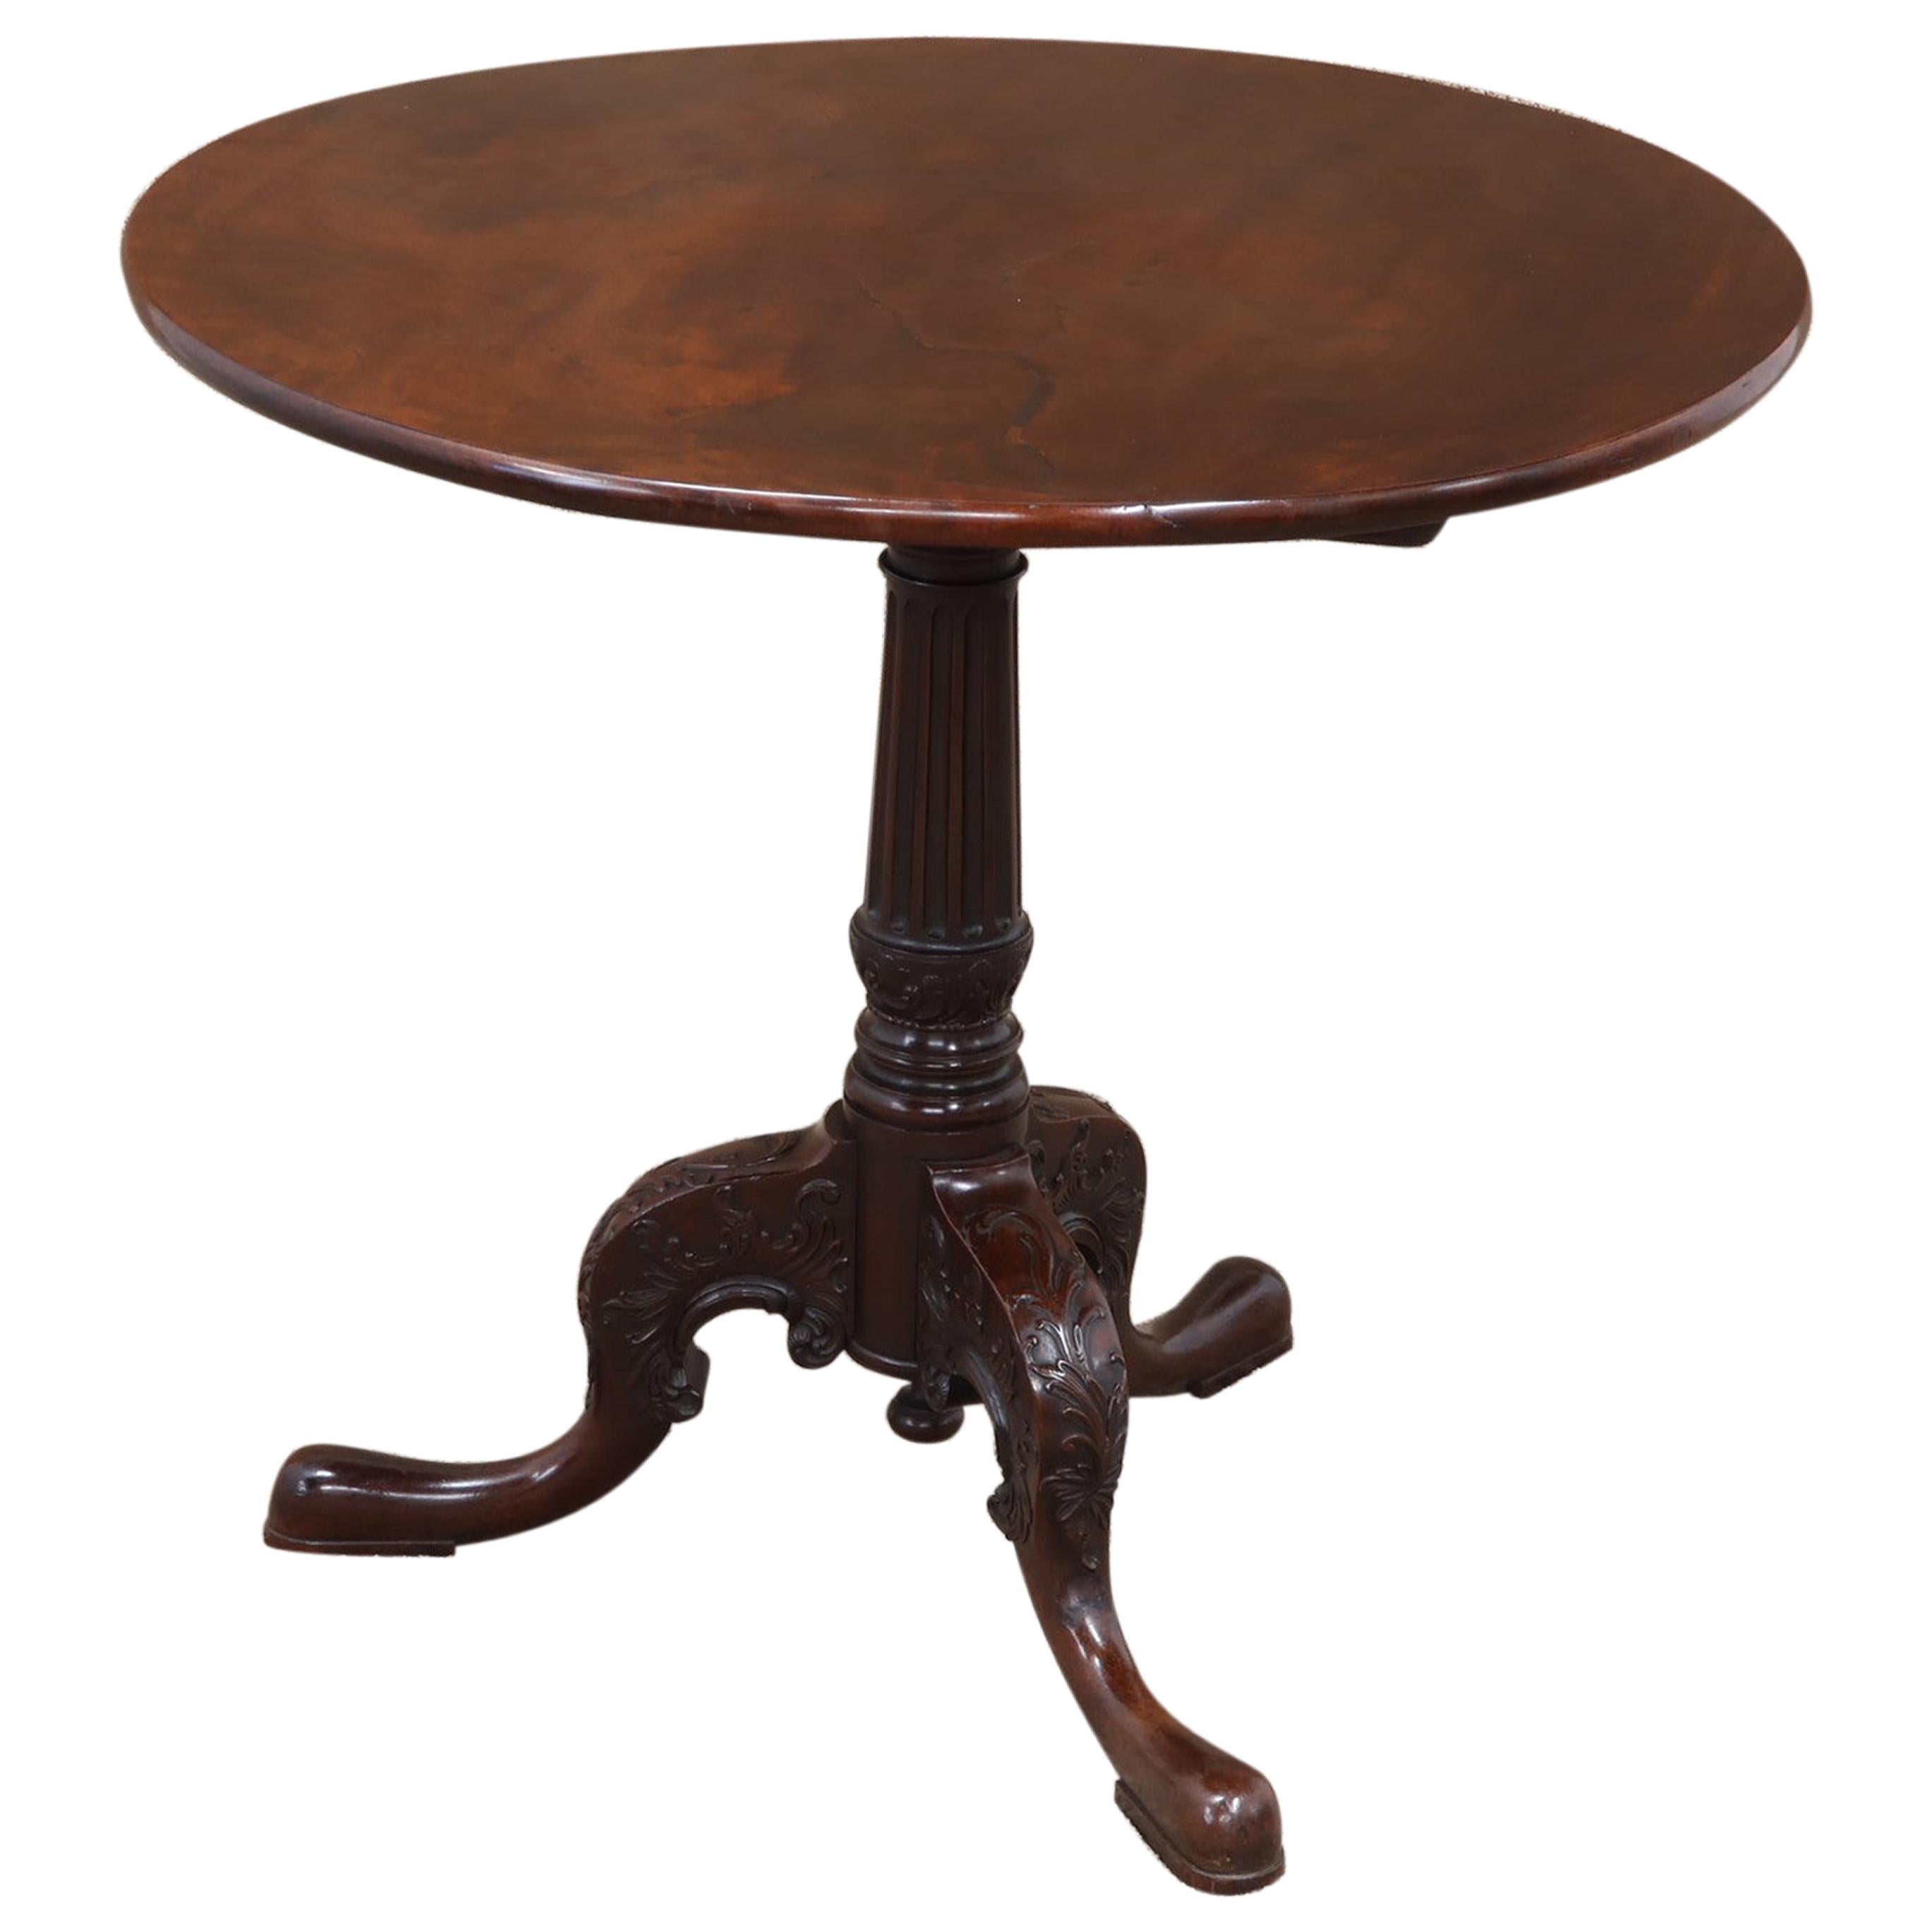 English George III Mahogany Tilt-Top Tea Table with Well-Carved Base, circa 1780